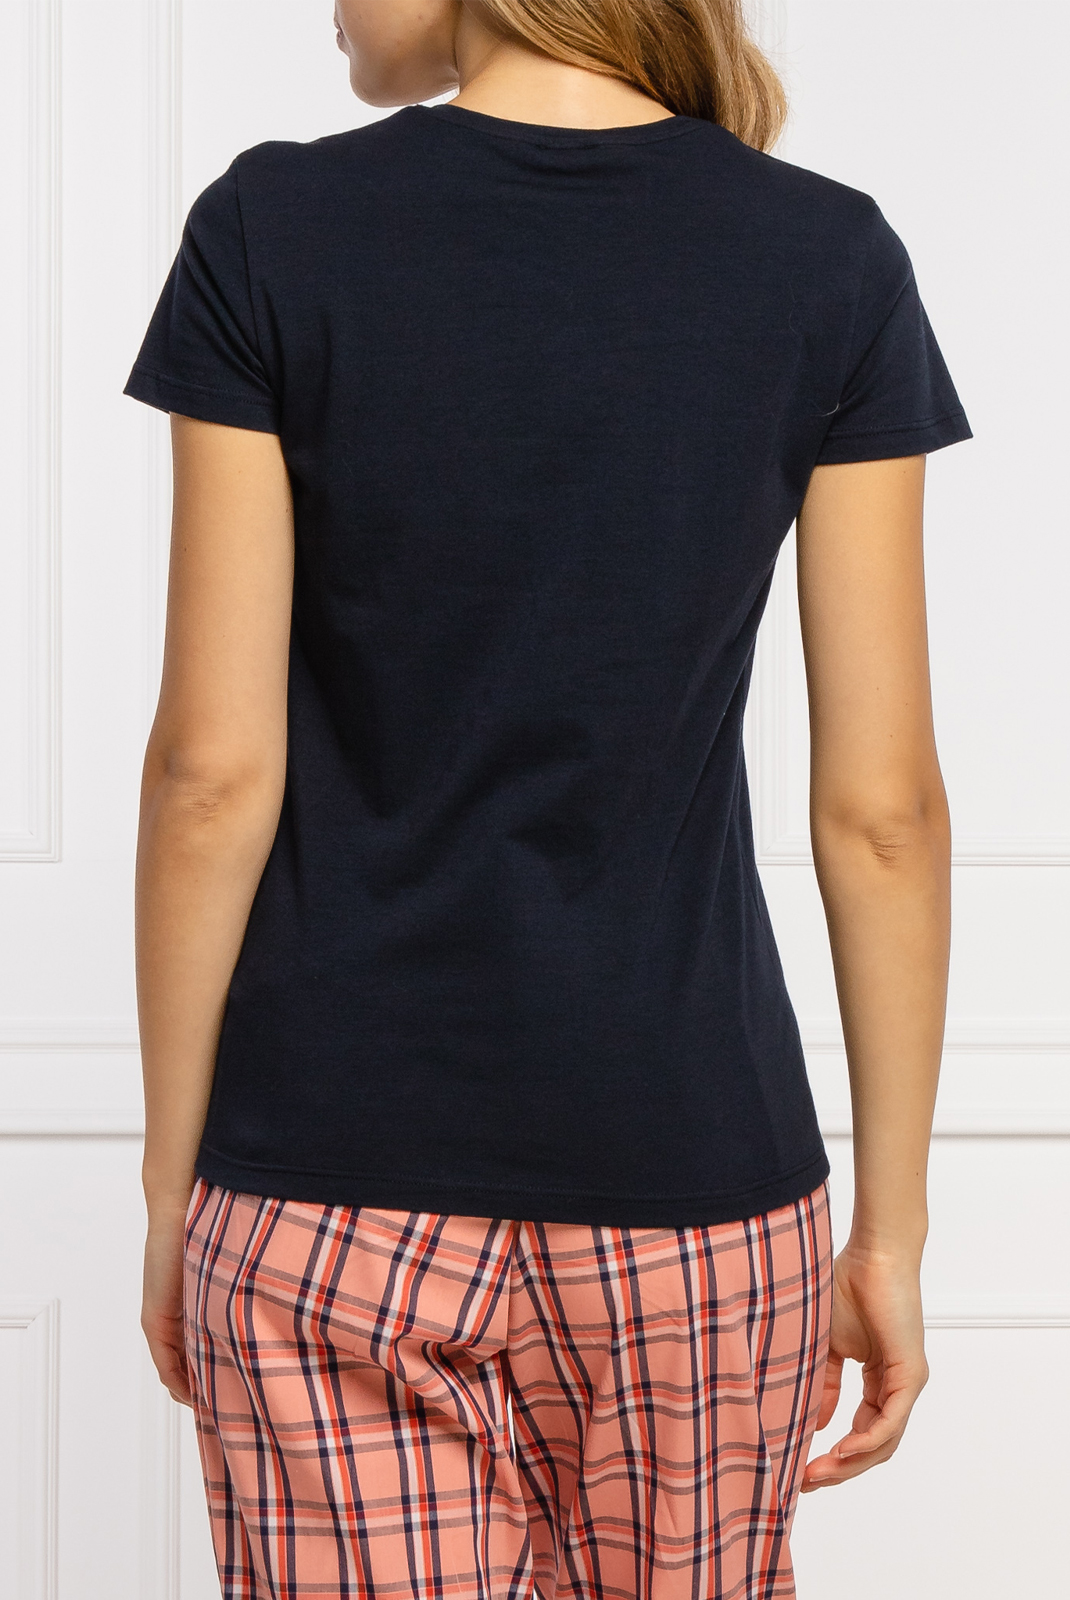 Tee-shirt slim fit bleu Emporio Armani - 163139 femme